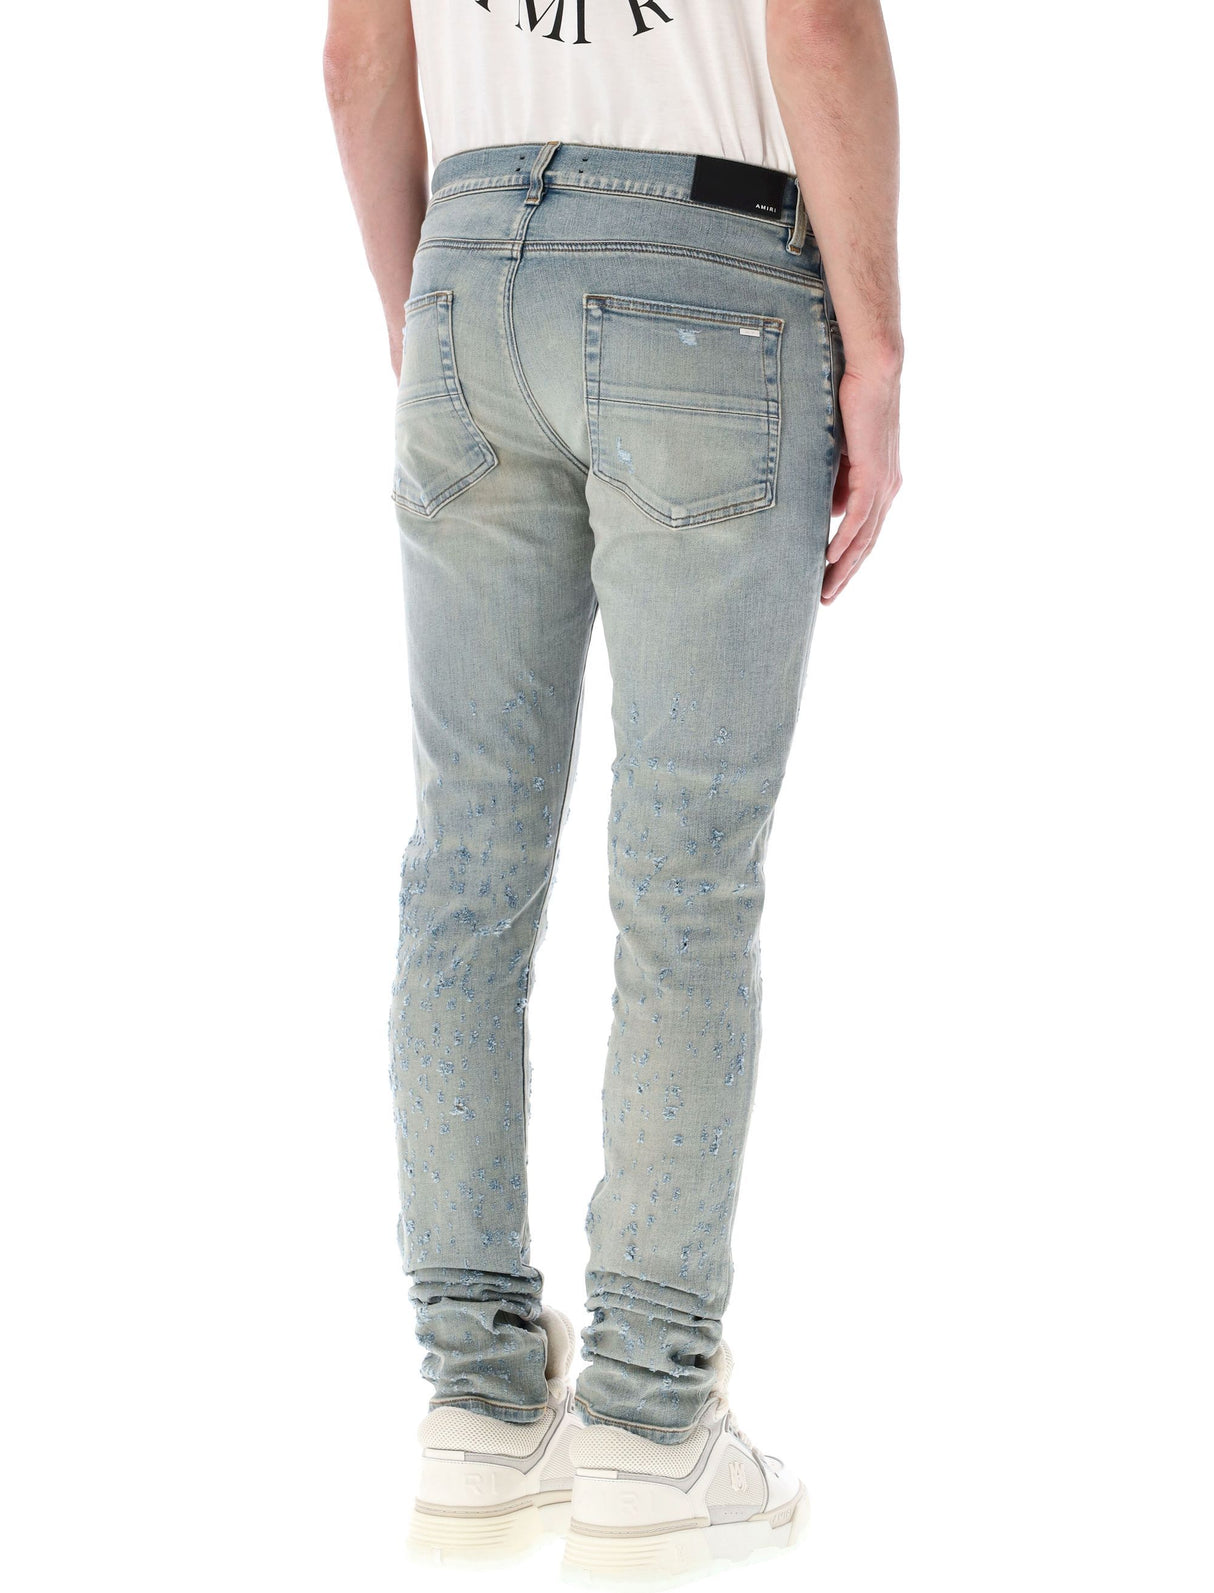 AMIRI Antique Indigo Shotgun Skinny Jeans for Men - Cotton Blend, Distressed, Skinny Fit